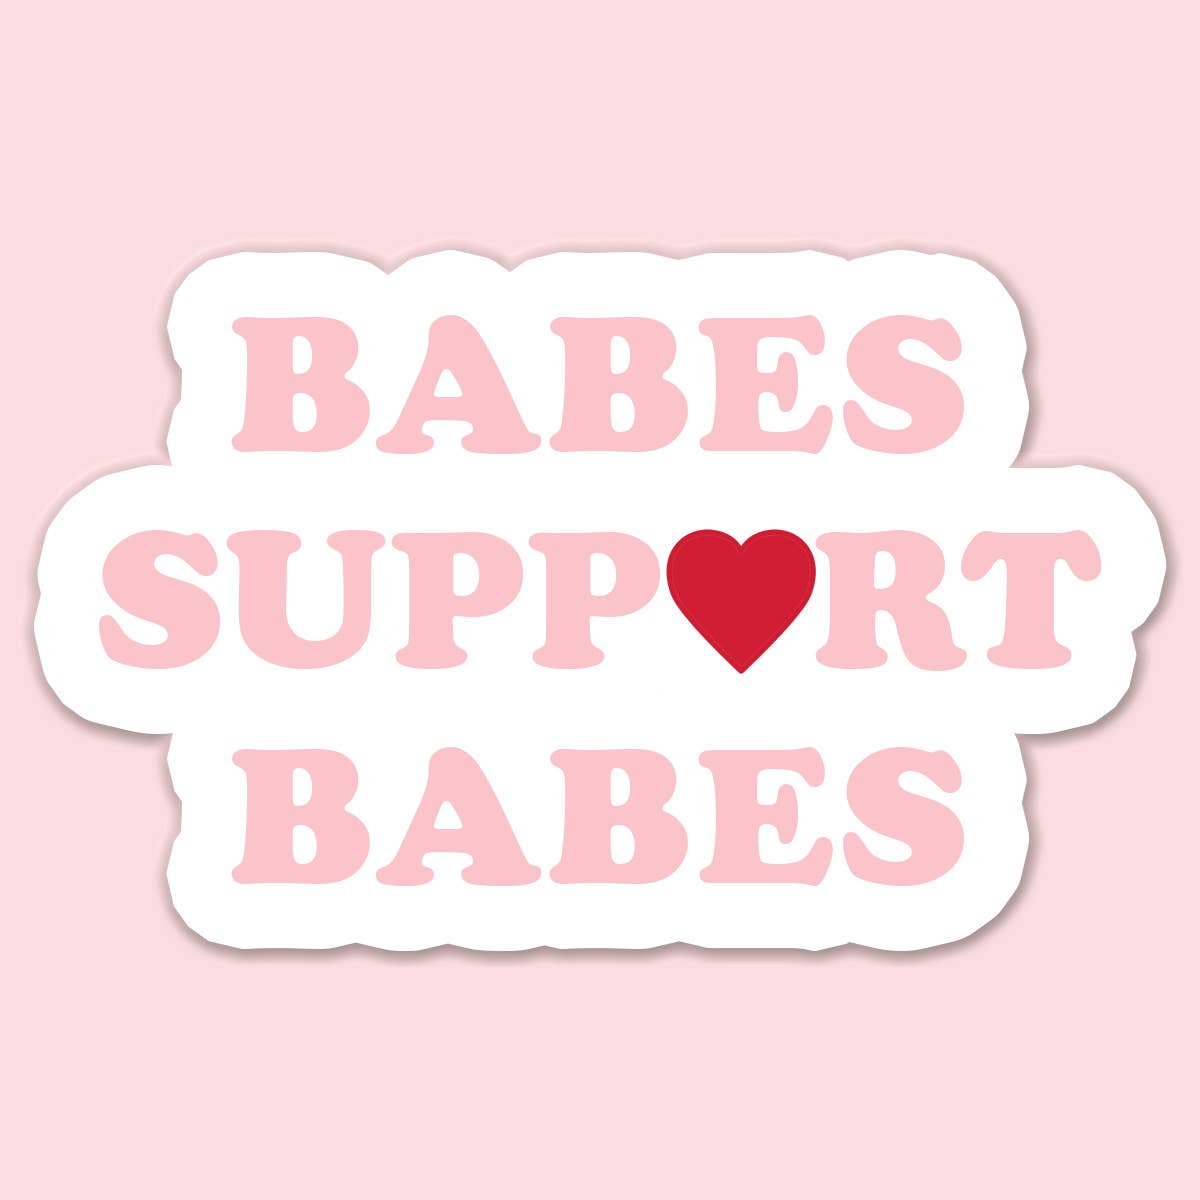 Babes Support Babes Sticker Decal